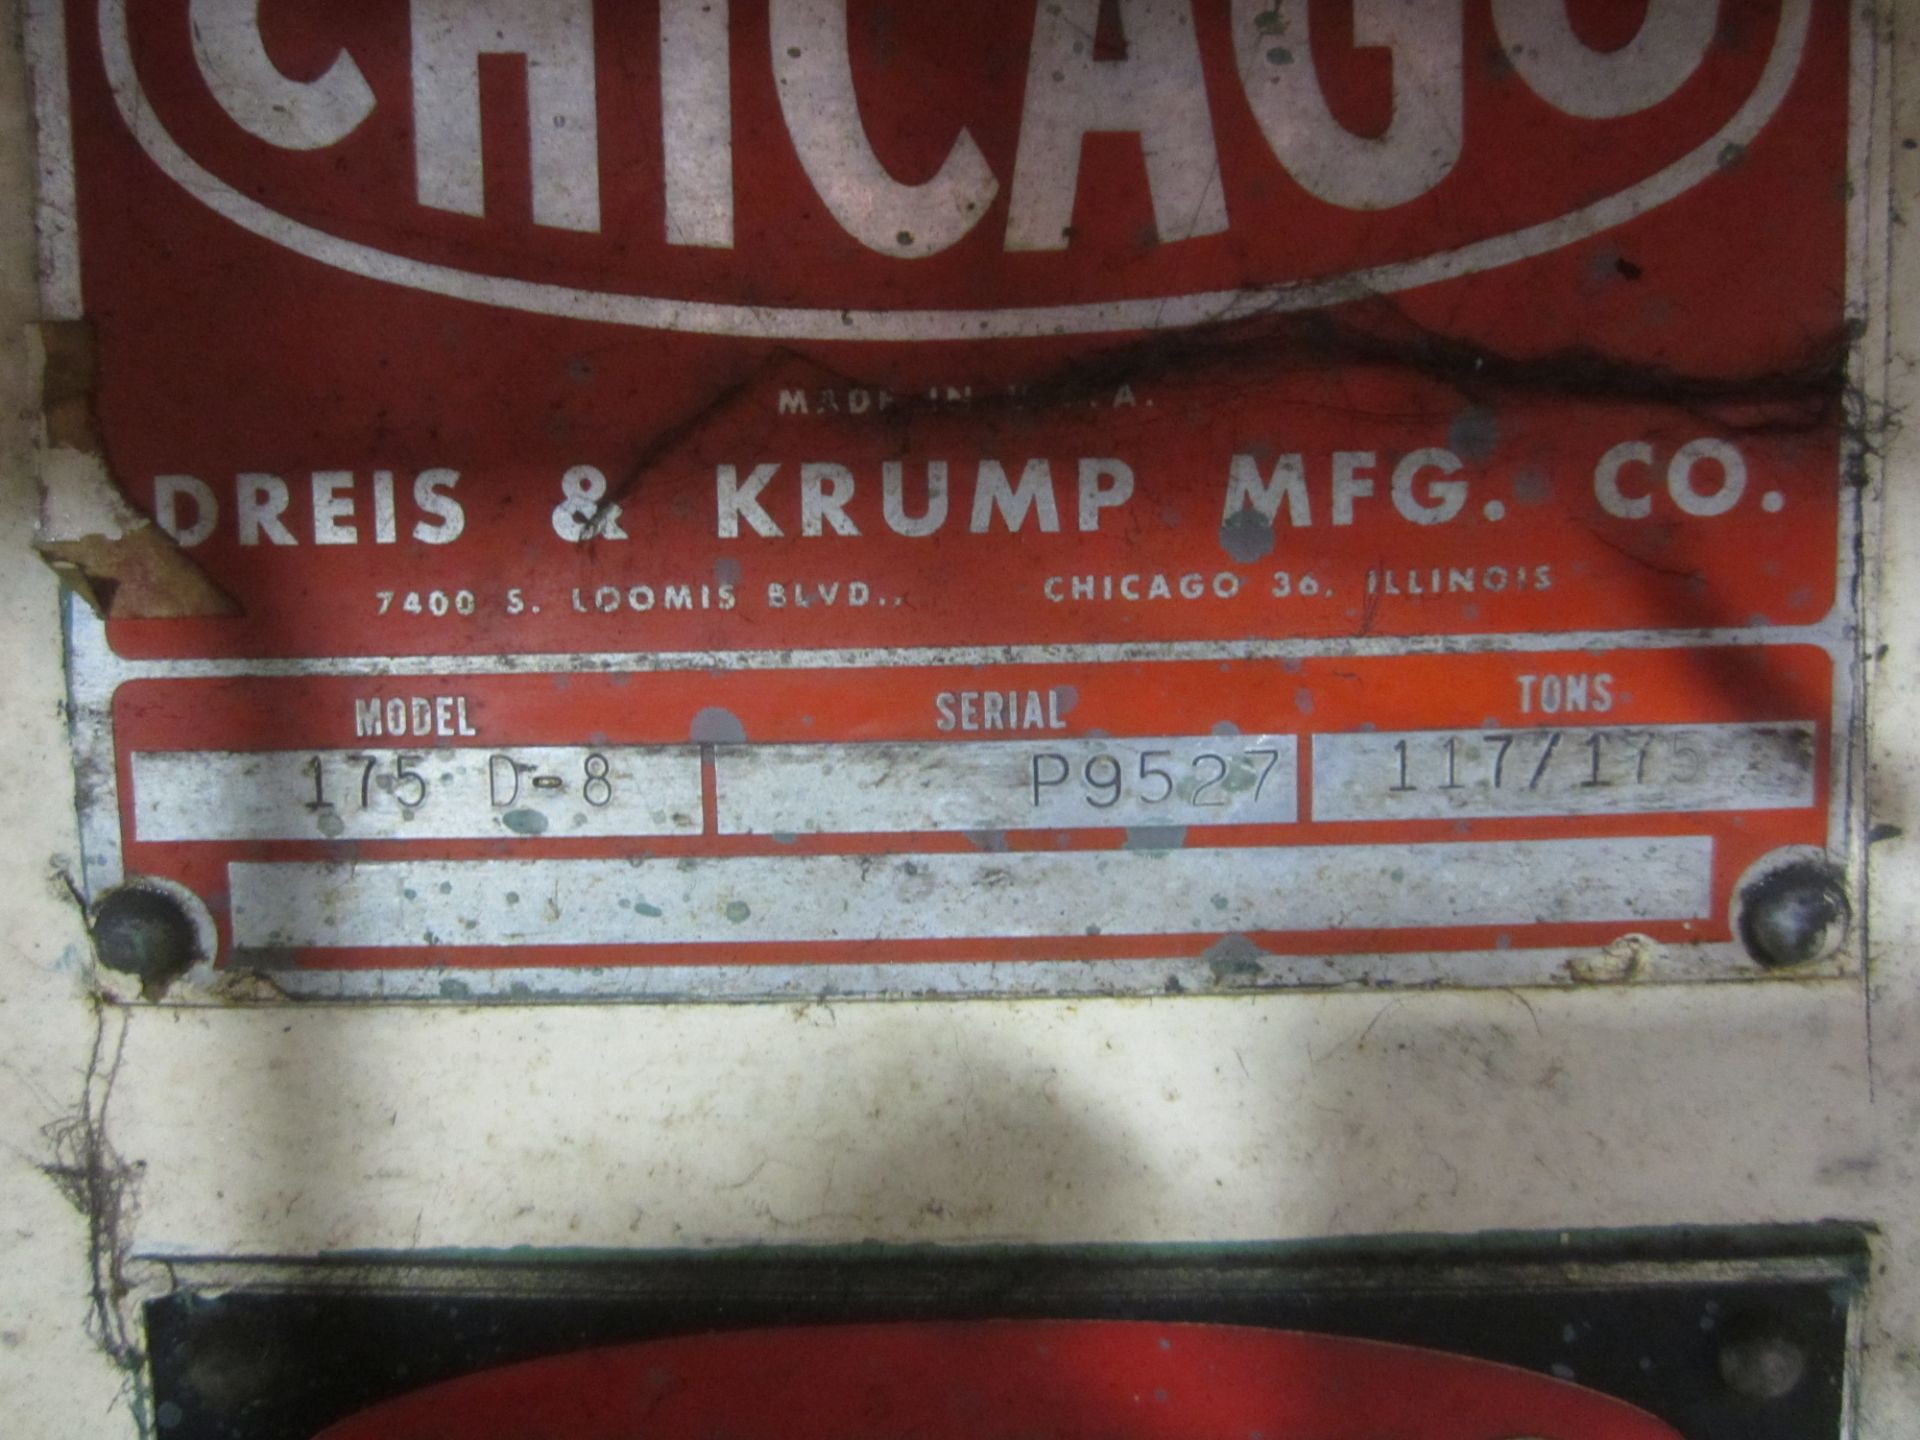 Chicago Dreis & Krump Model 175-D-8 Mechanical Press Brake, s/n P-9524, 175 Ton, 10’6” Overall, 8’6” - Image 7 of 7